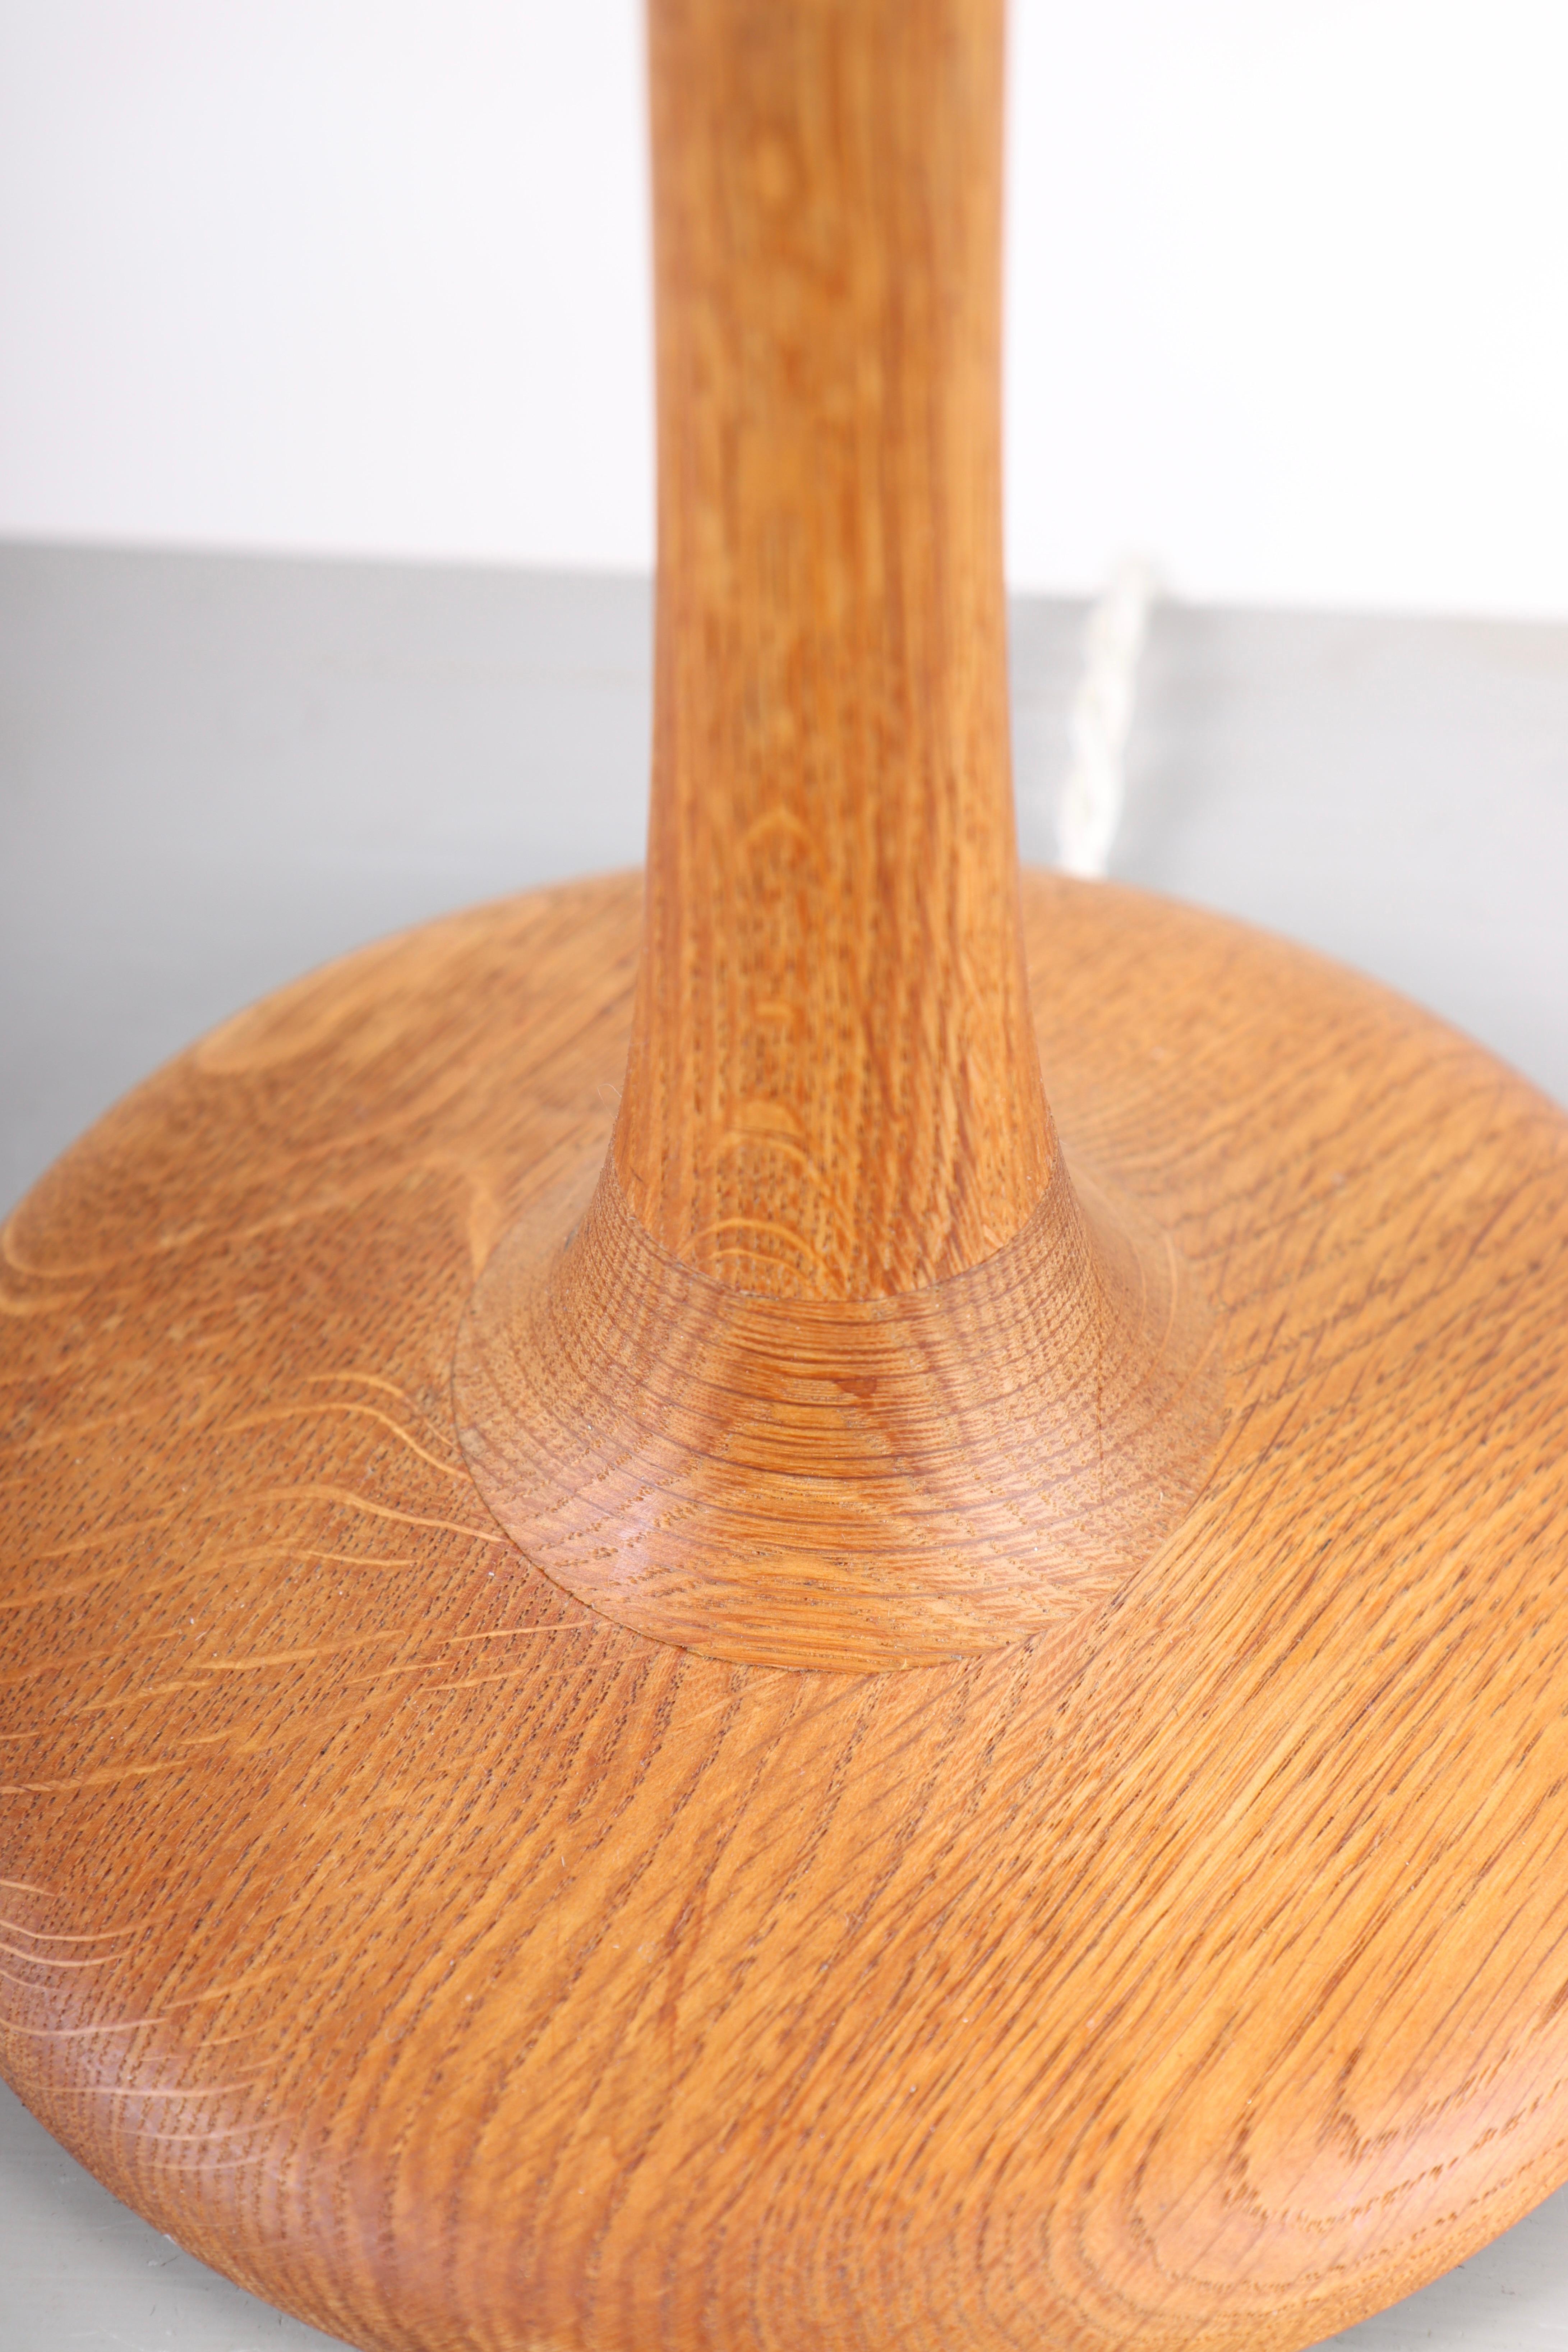 Danish Mid-Century Scandinavian Table Lamp in Solid Oak, Made in Denmark, 1960s For Sale